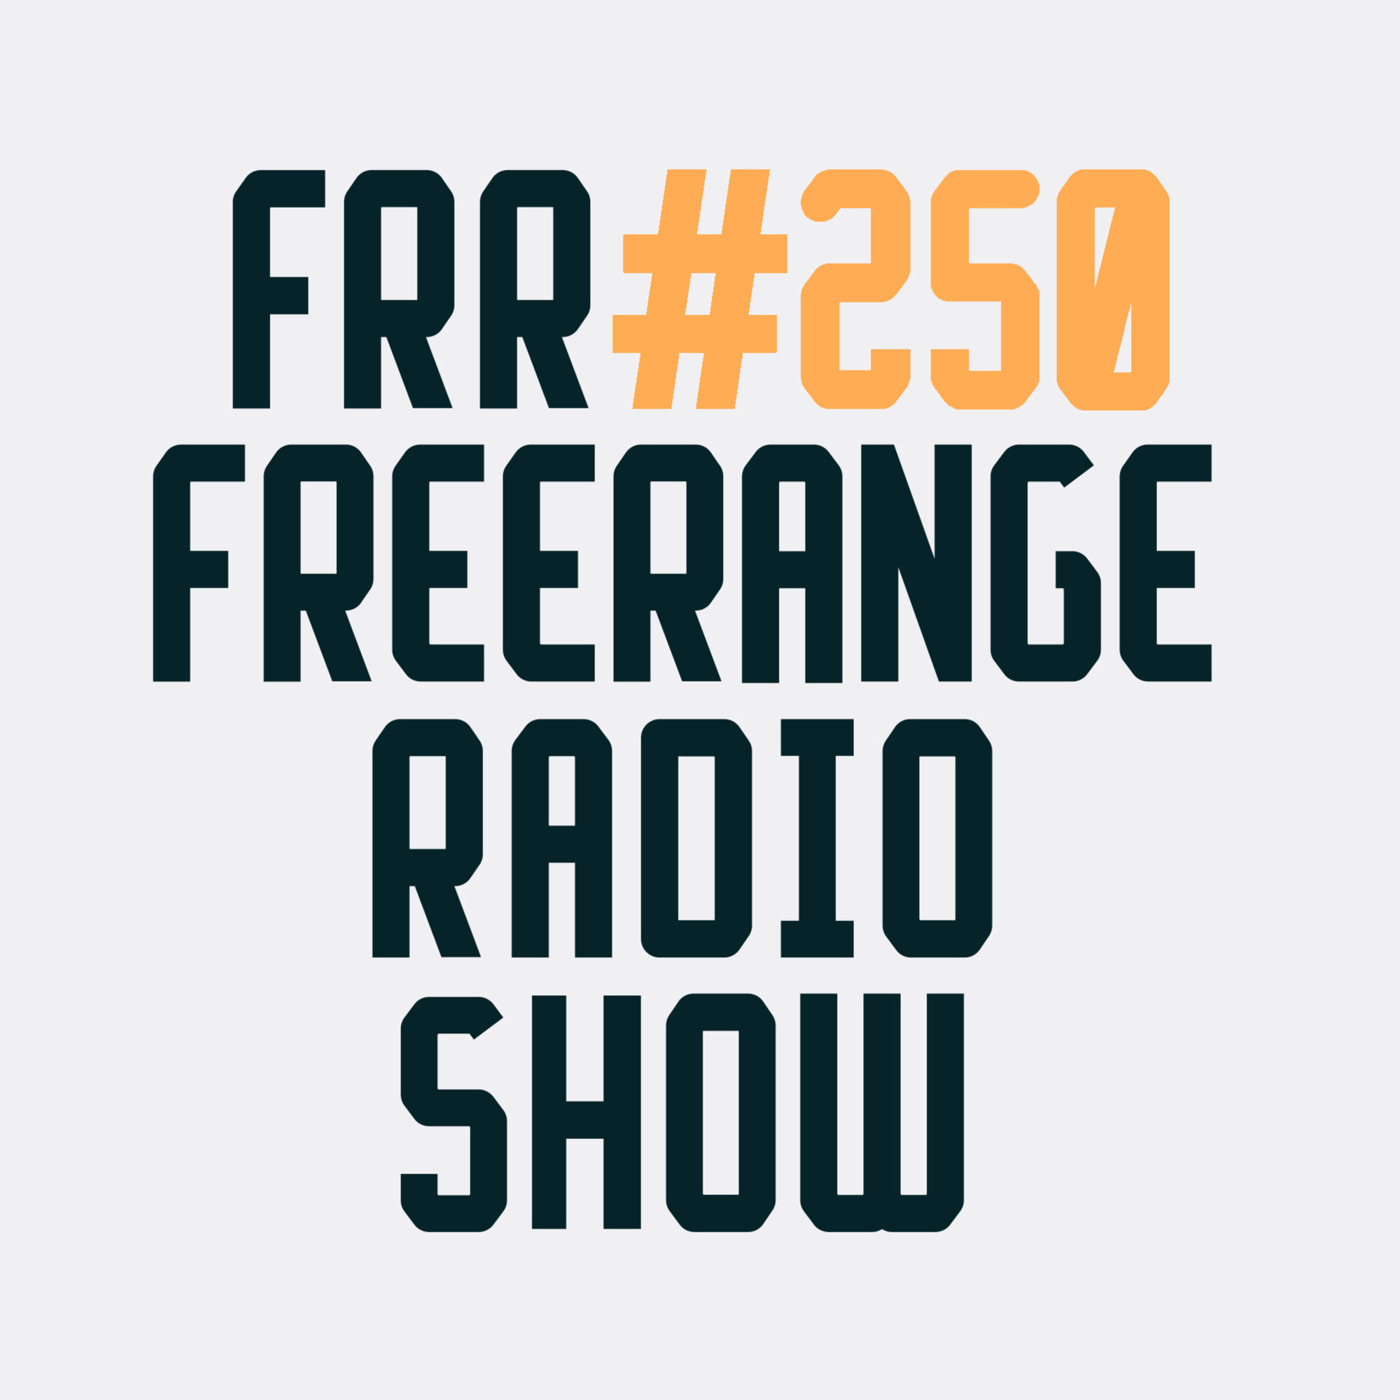 Episode 250: Freerange Records Radioshow No.250 - June 2022 With Matt Masters